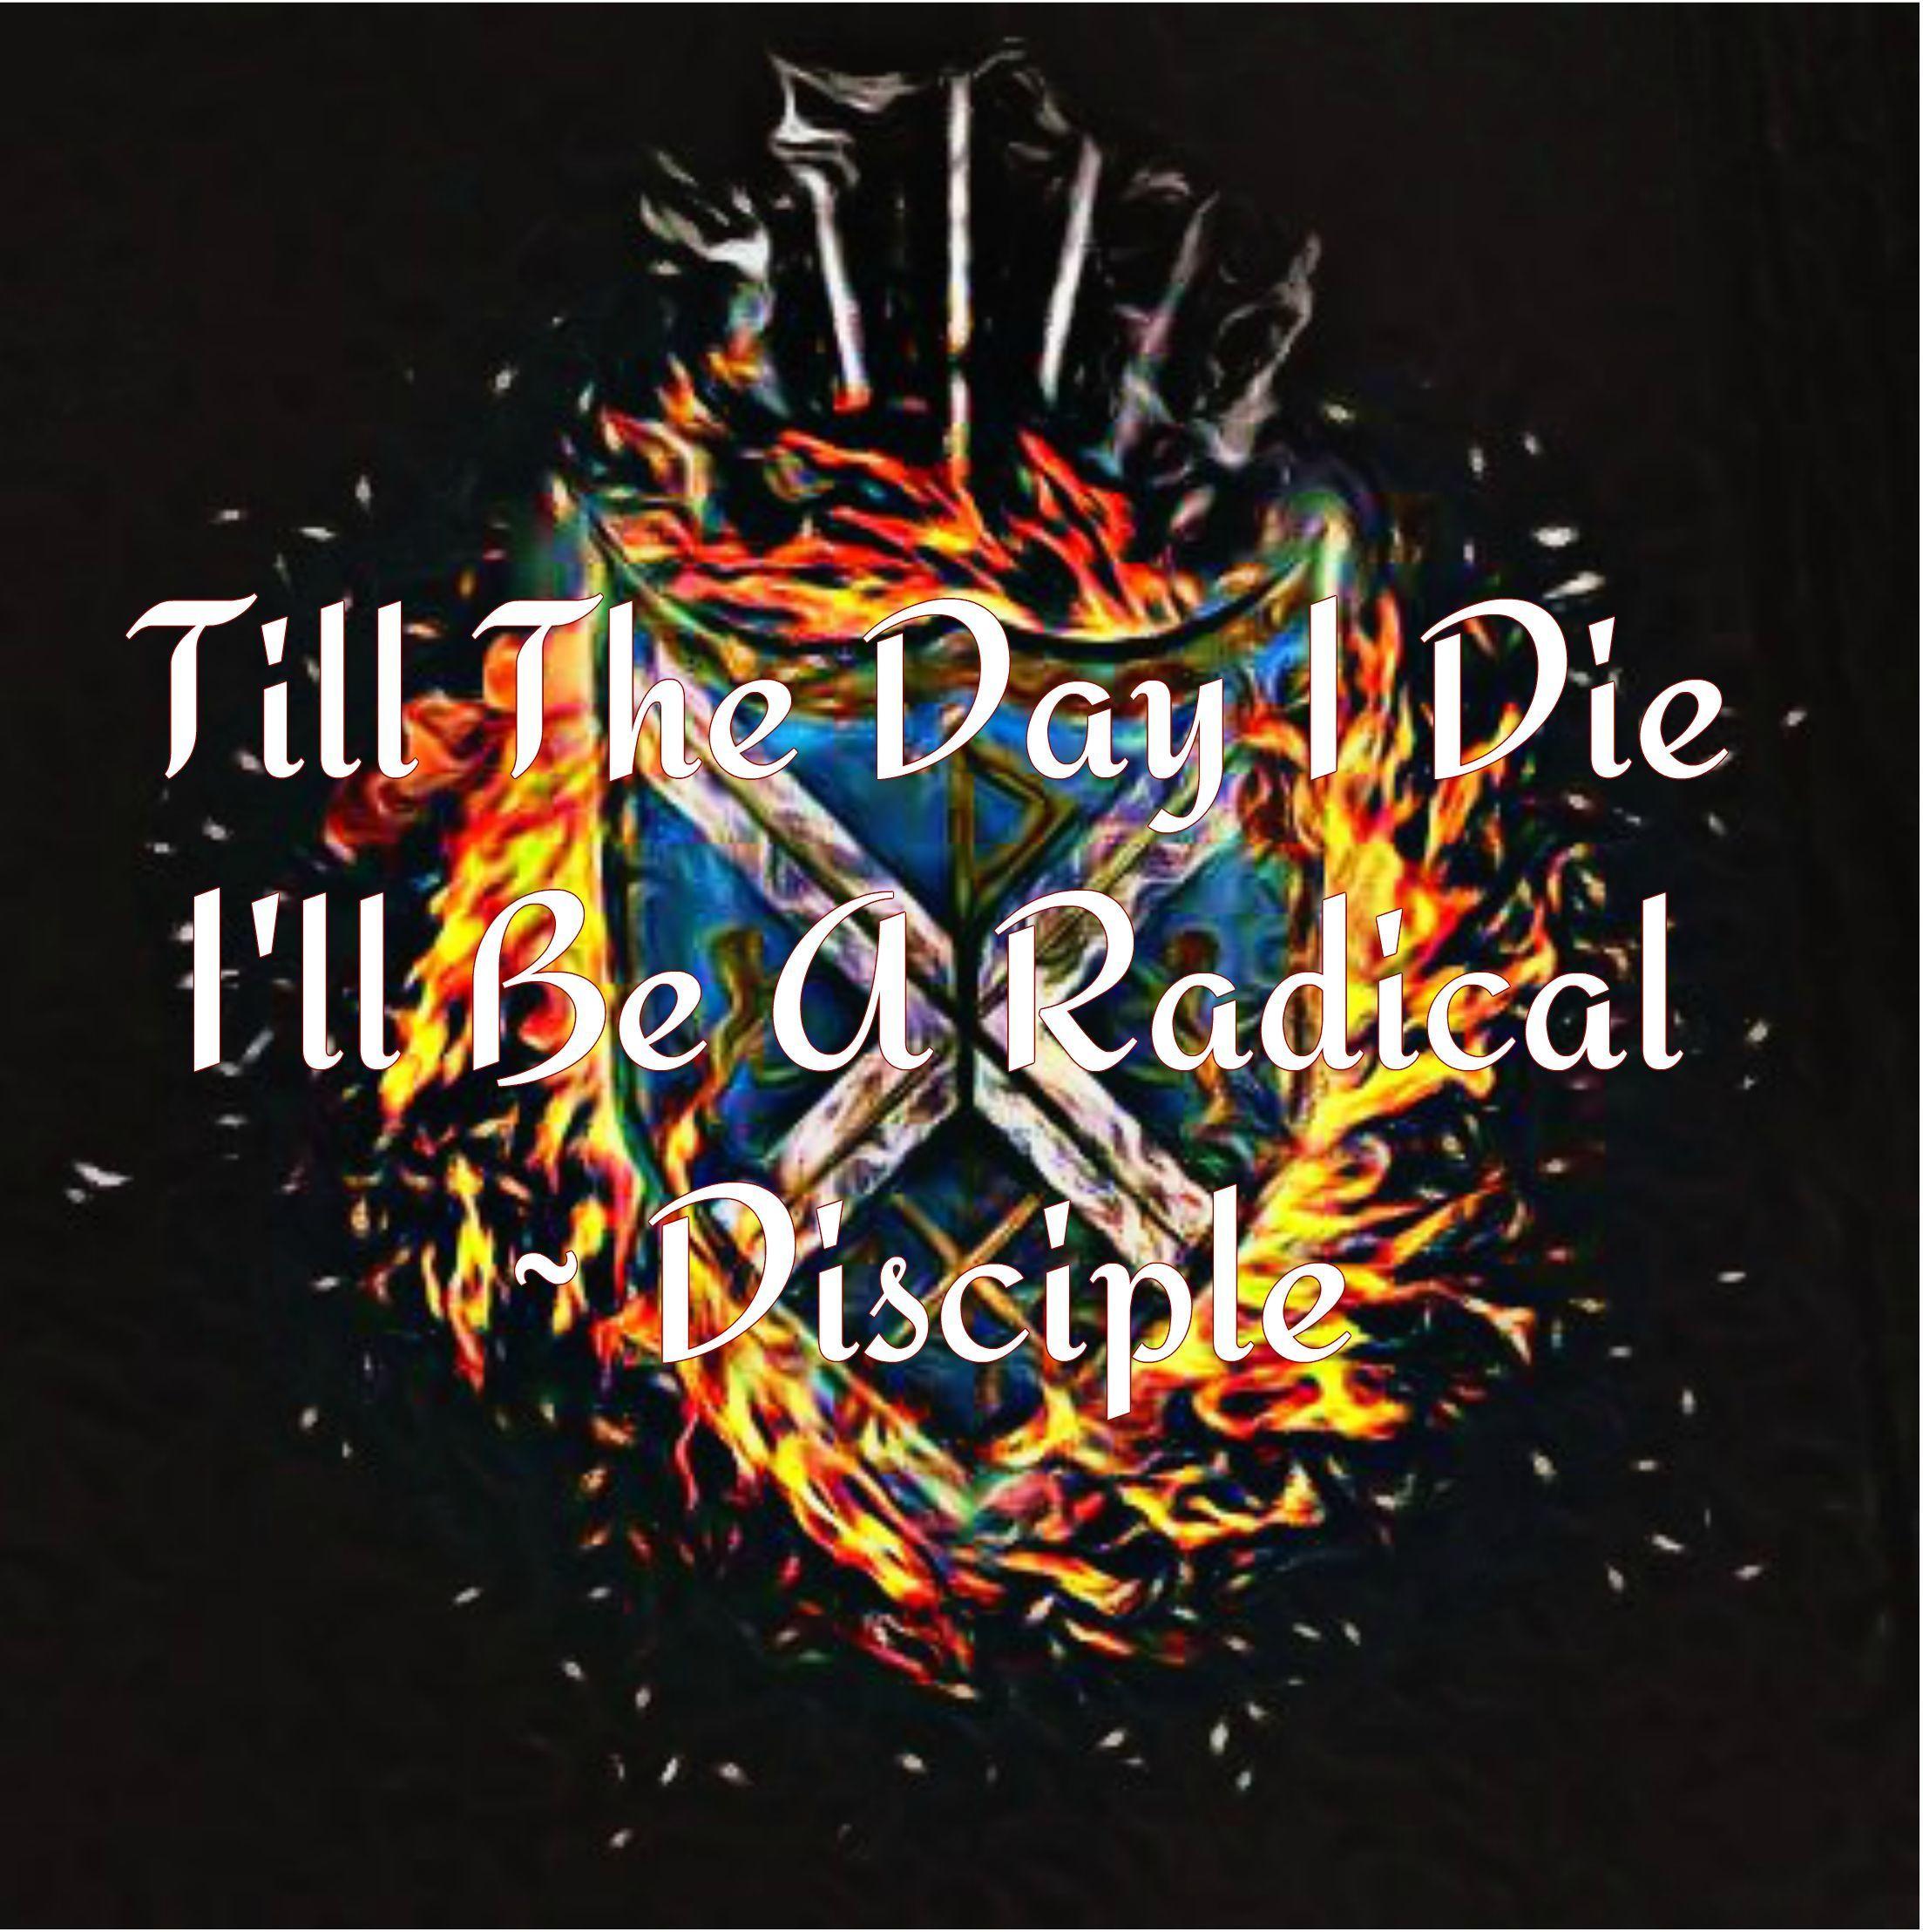 Disciple Band Logo - Radical:made by Jacey. Disciple. Disciple band